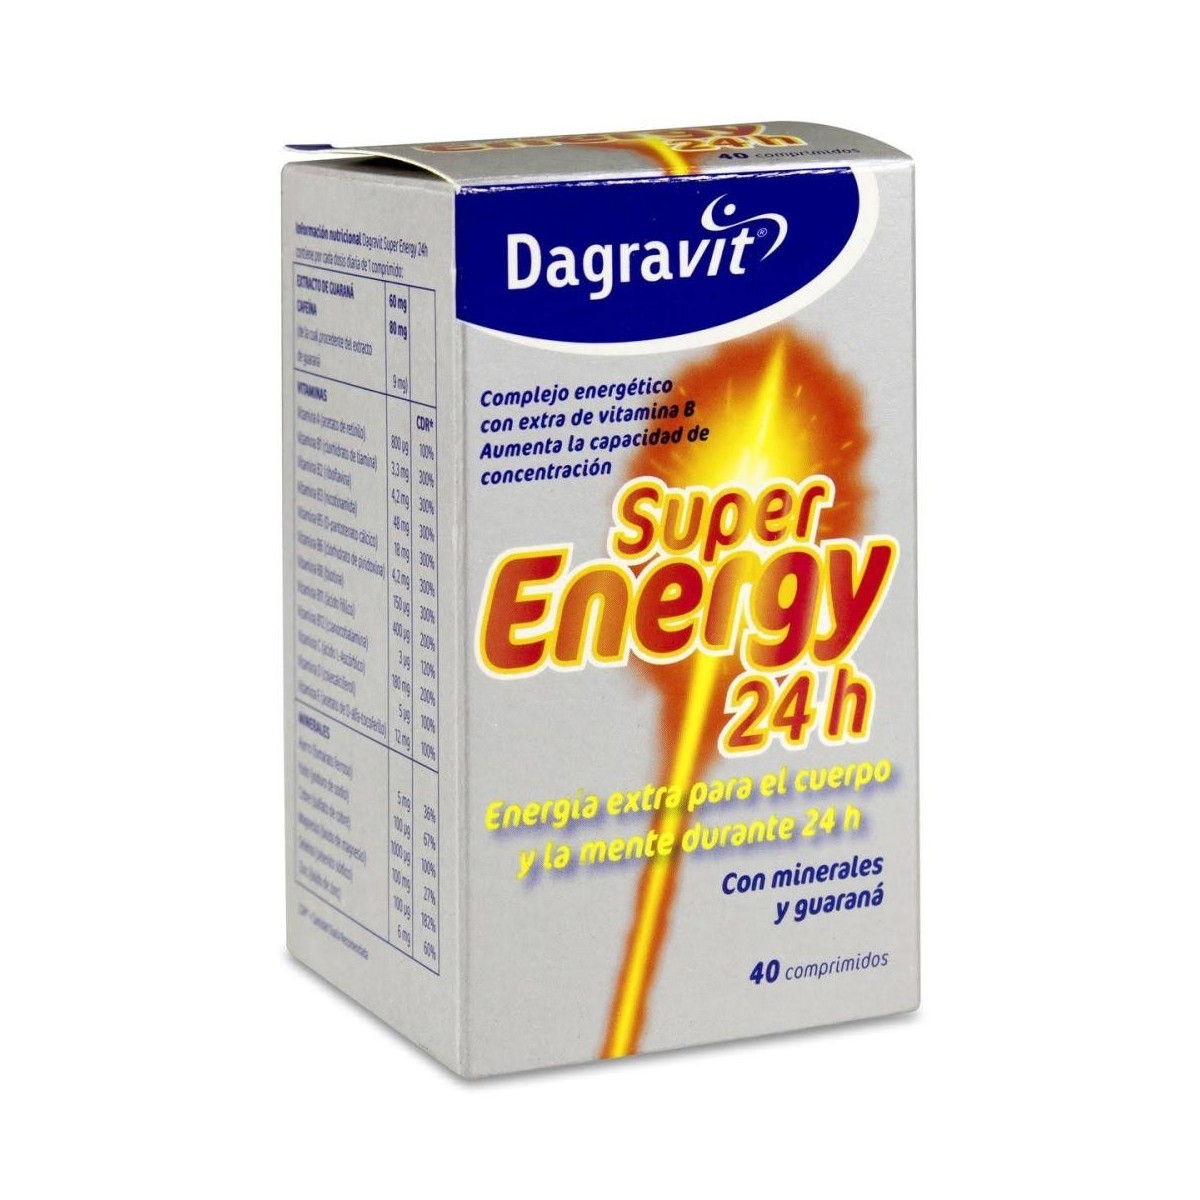 dagravit super energy 24h 40 comprimidos